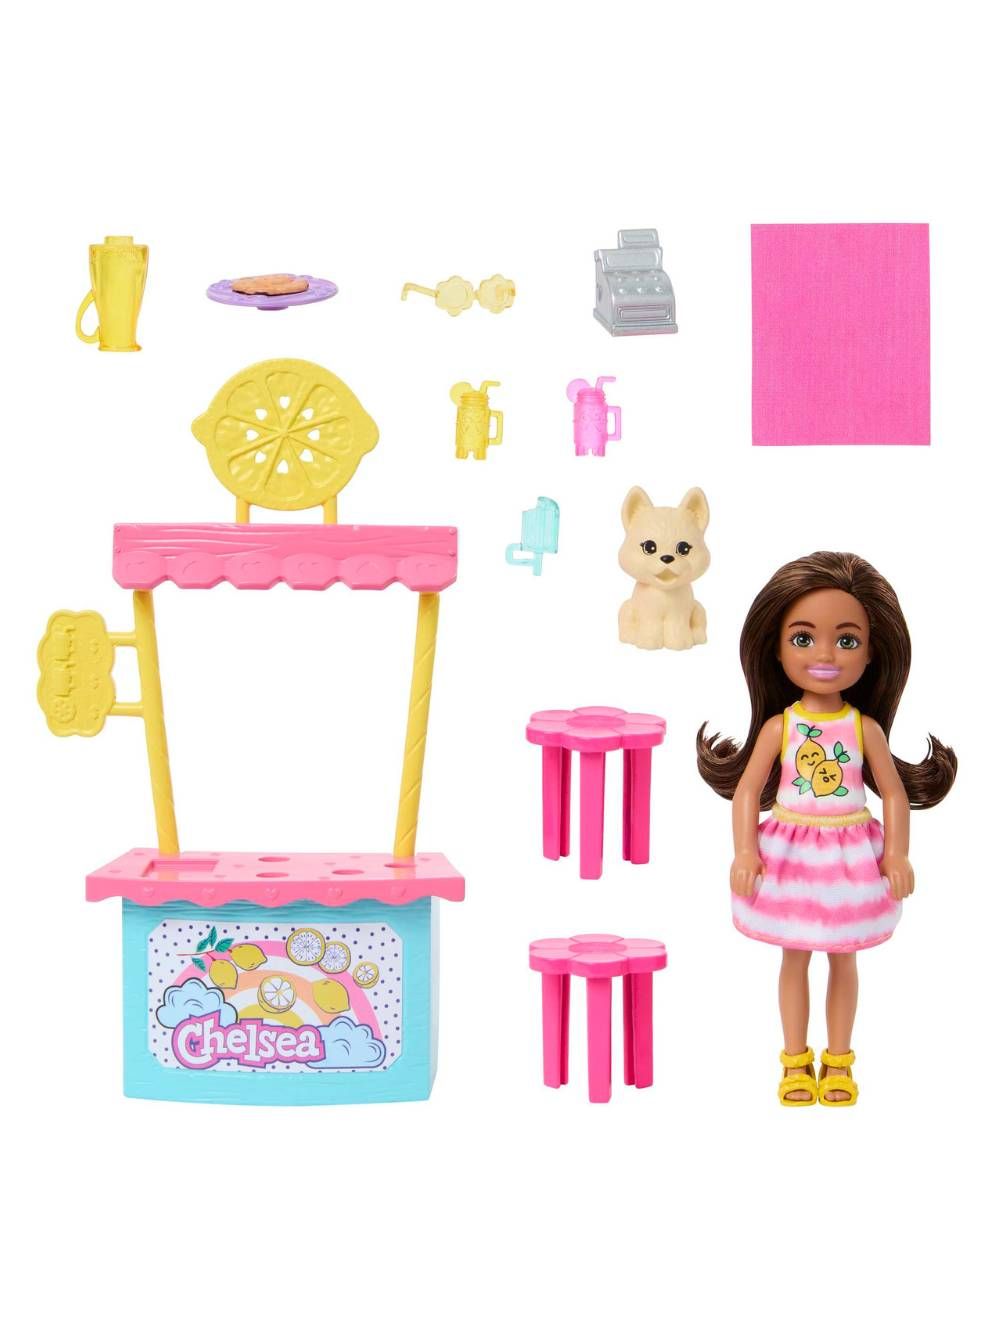 Barbie & Chelsea Ice Cream Shop Playset 